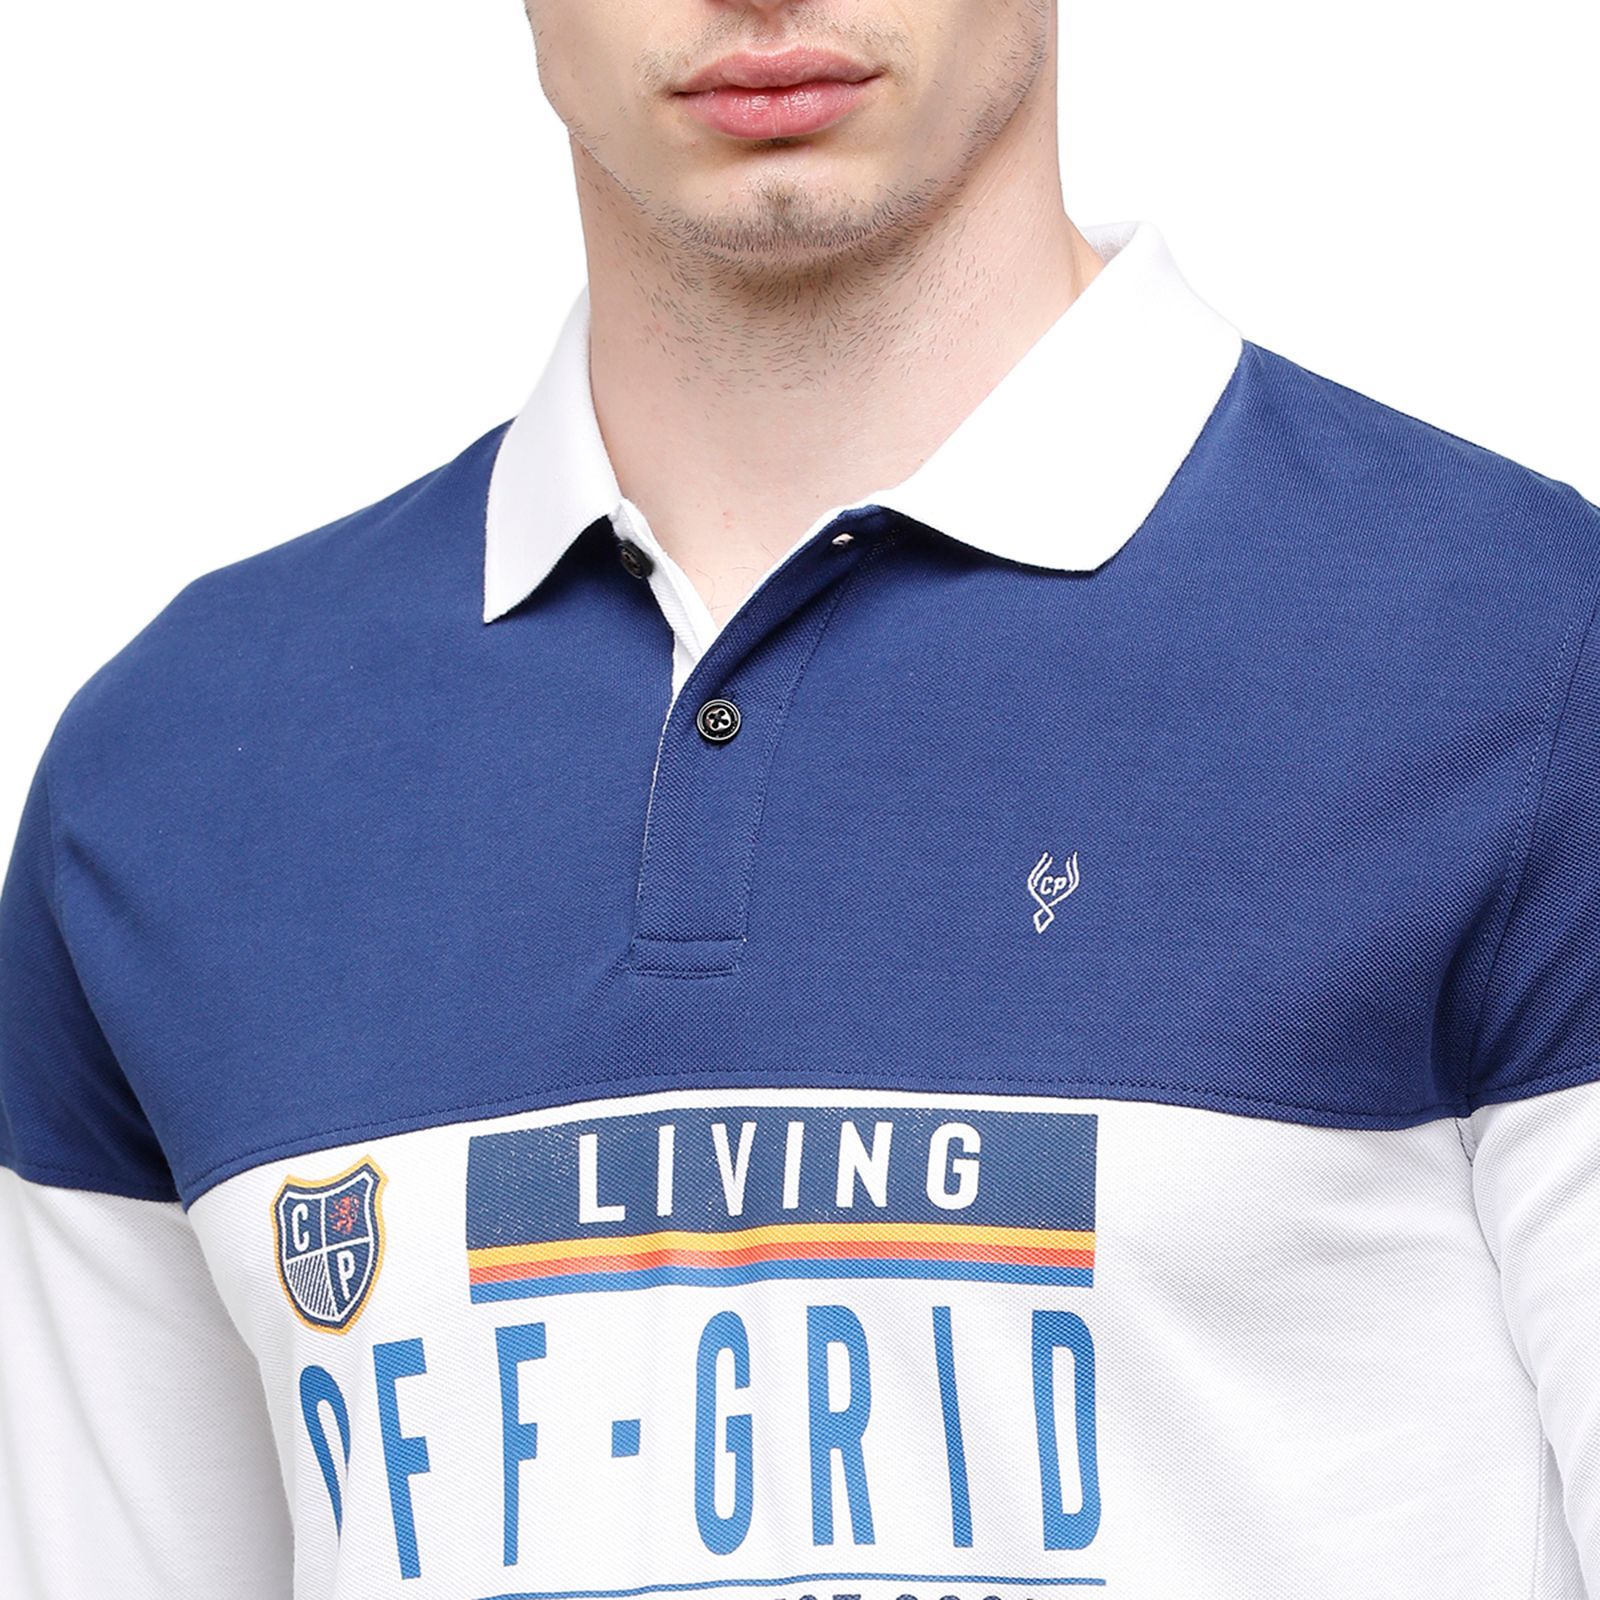 Classic Polo Mens Printed Full Sleeve 100% Cotton Blue:White Polo Neck T-Shirt ( VERNO - 256 B SF P ) T-Shirt Classic Polo 